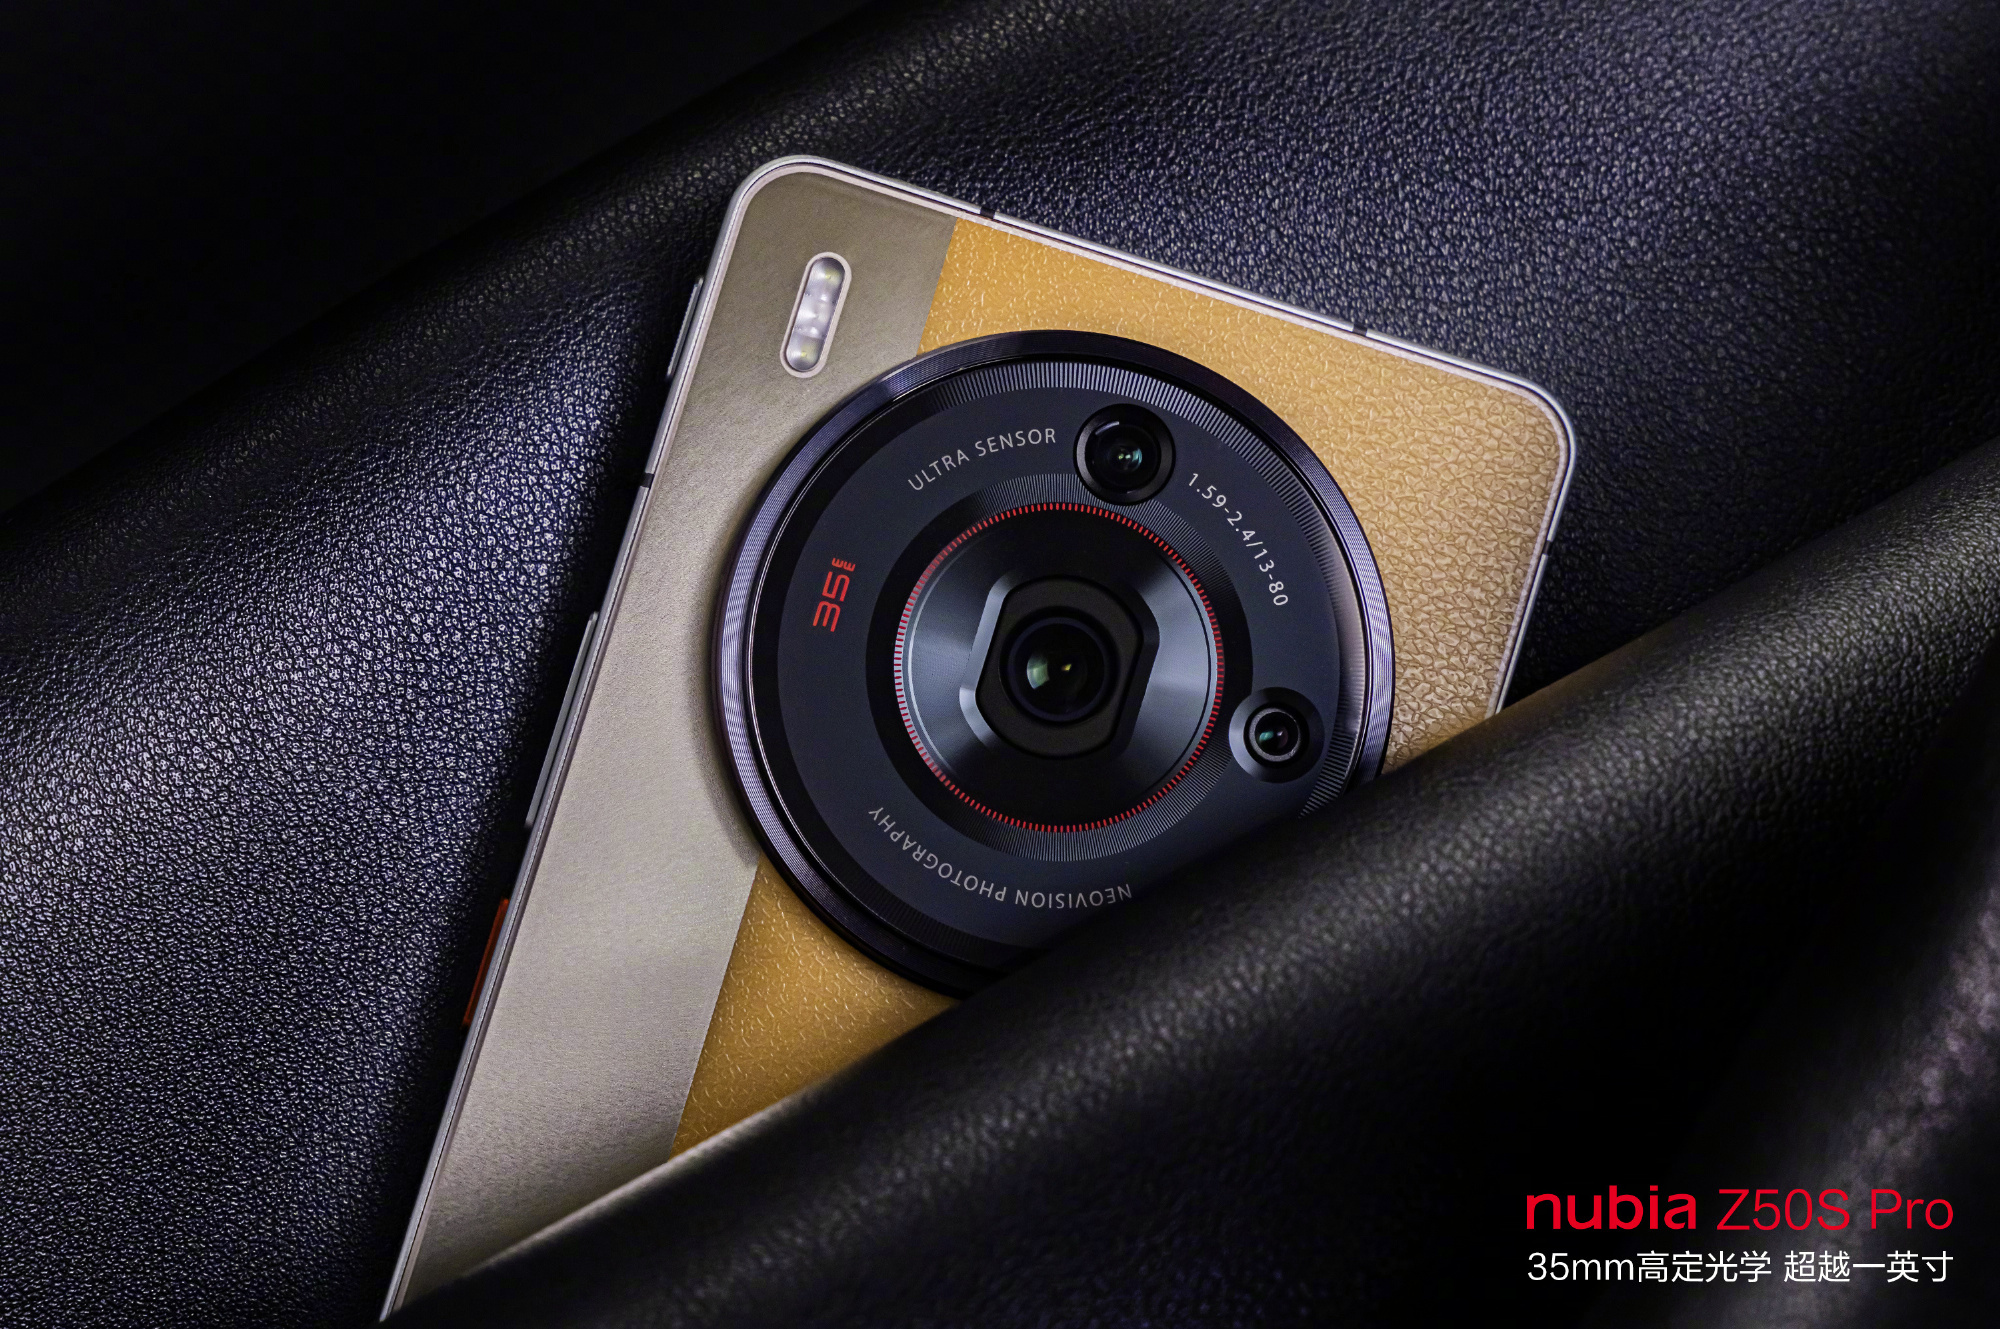 nubia Z50S Pro review: Camera quality